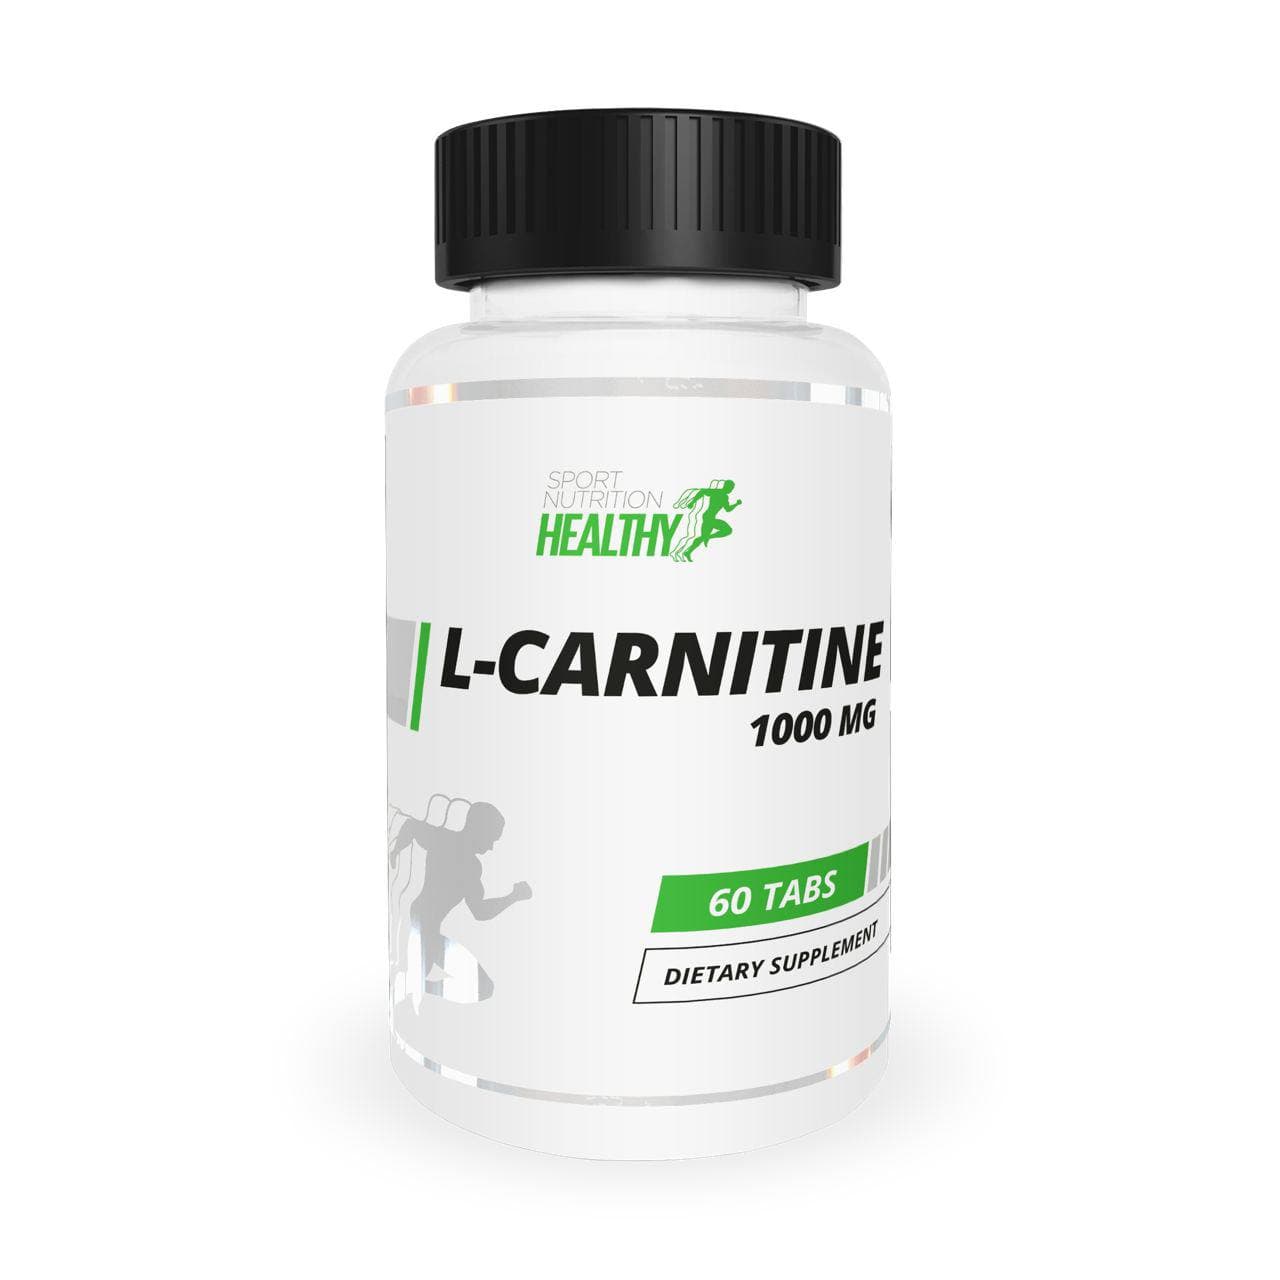 Жиросжигатель Healthy by MST L-Carnitine 1000 mg, 60 таблеток,  ml, MST Nutrition. Fat Burner. Weight Loss Fat burning 